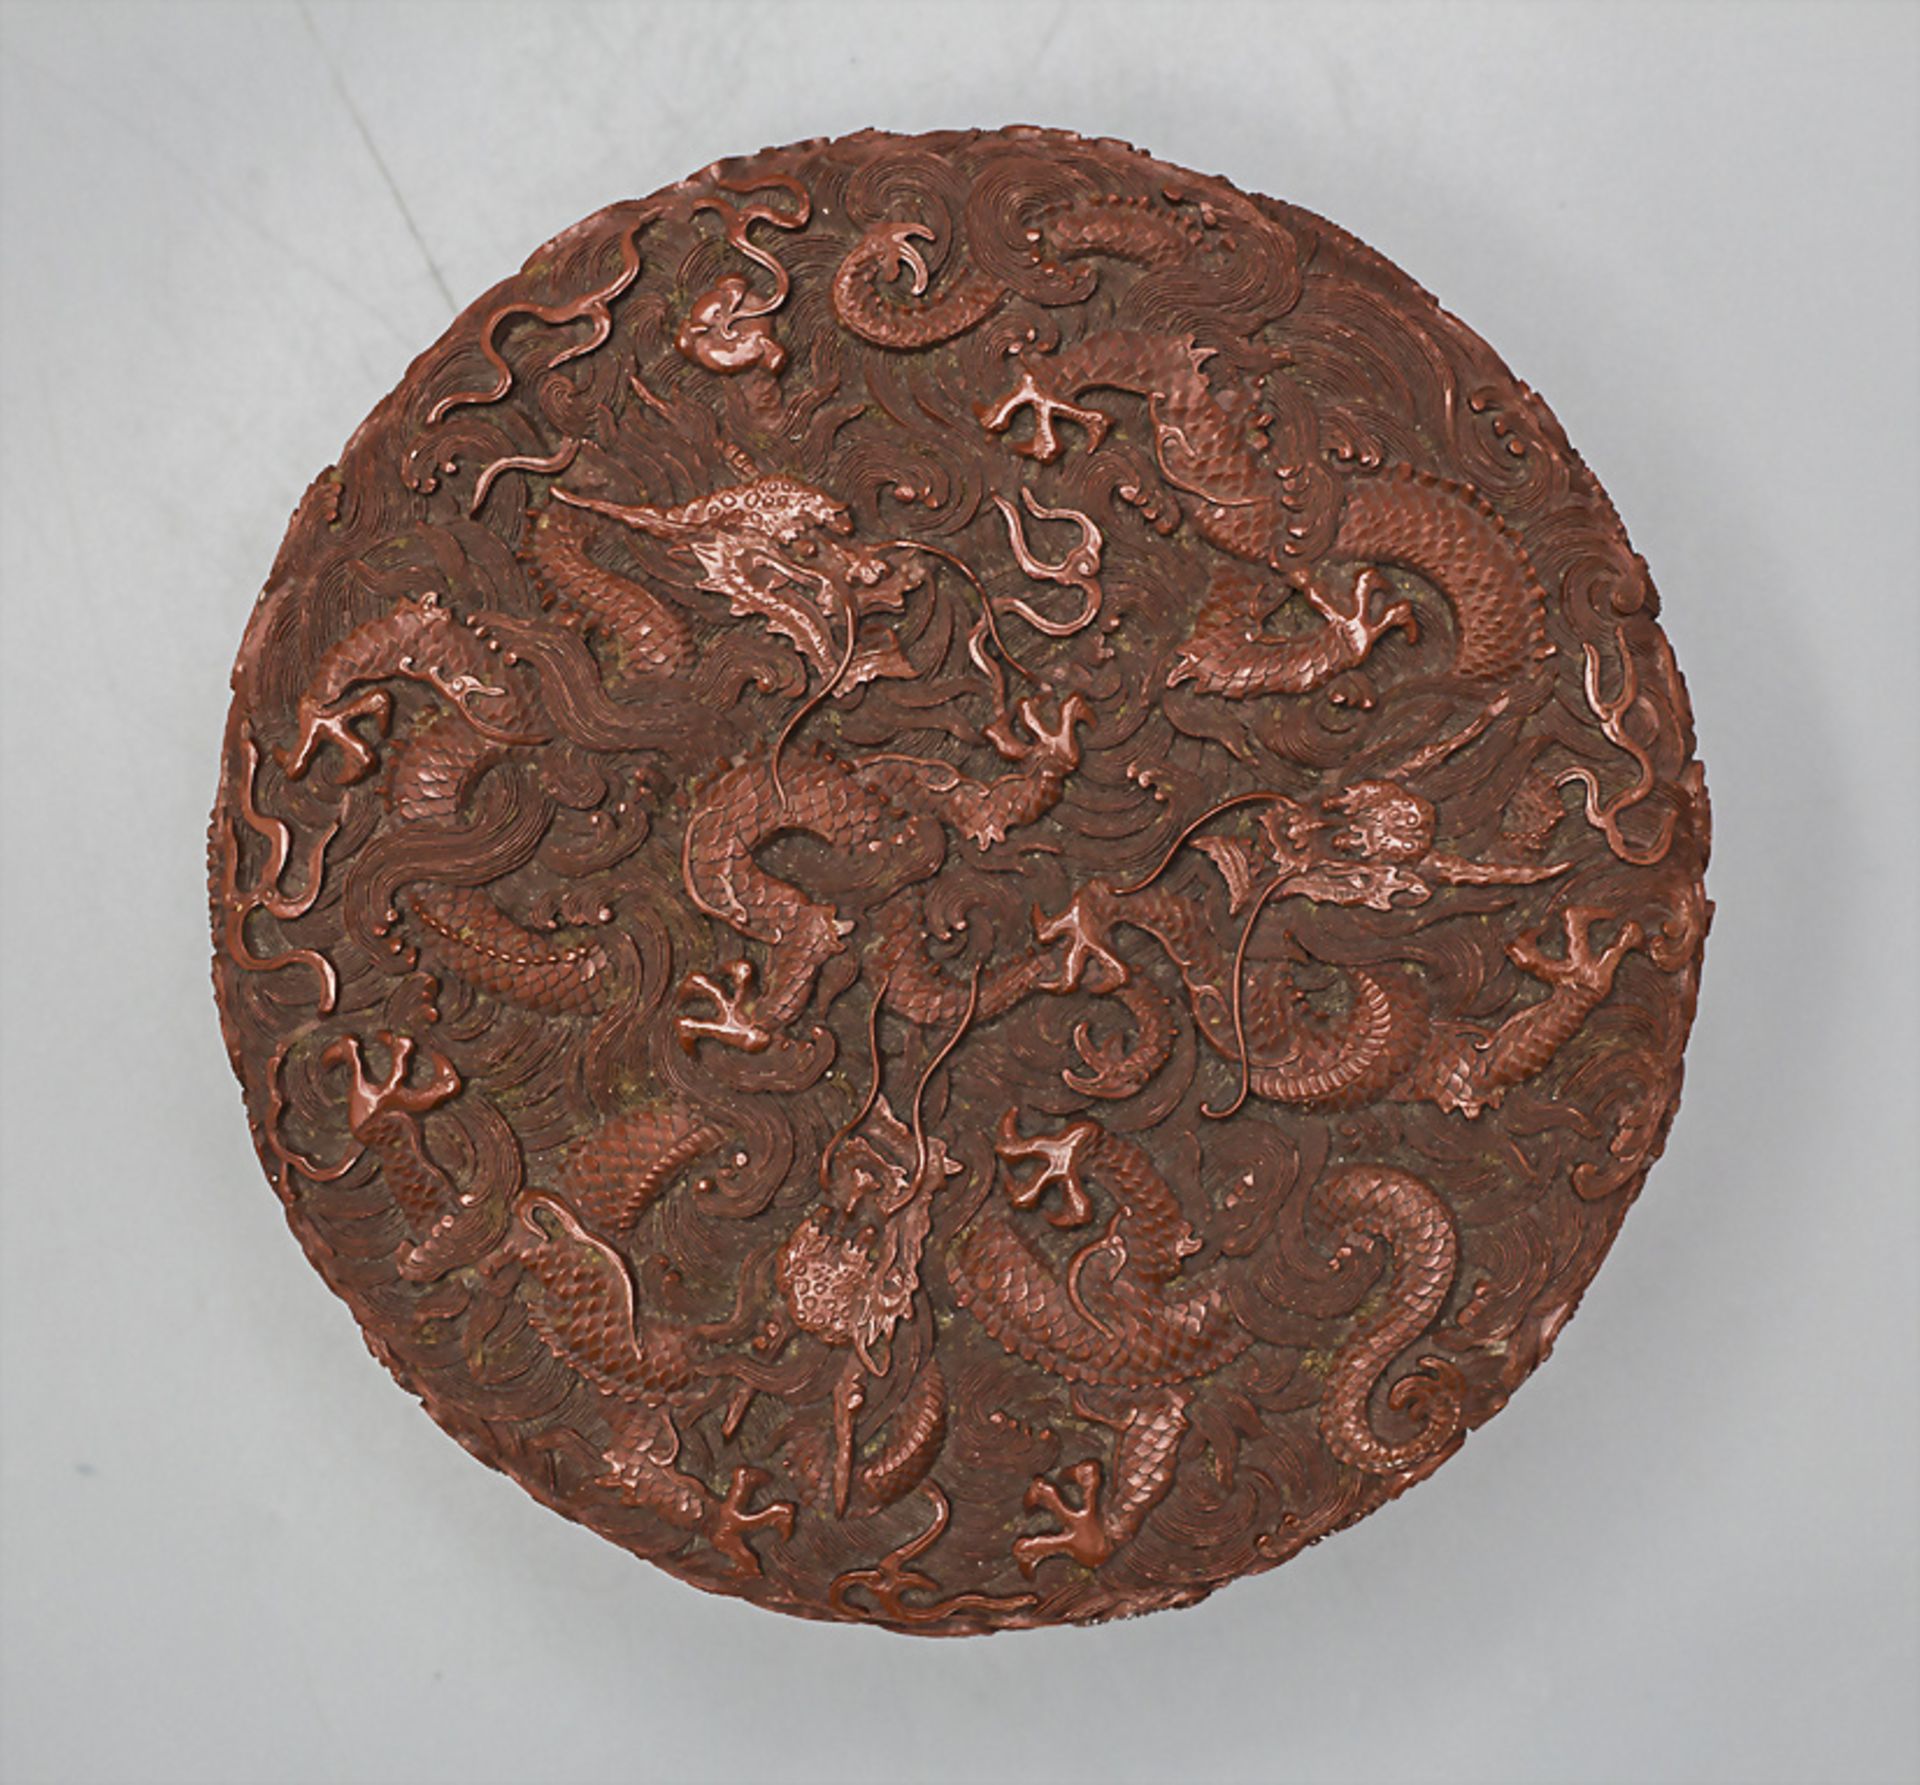 Deckeldose mit Drachenreliefdekor / A lidded box with dragon relief decoration, China - Image 4 of 8